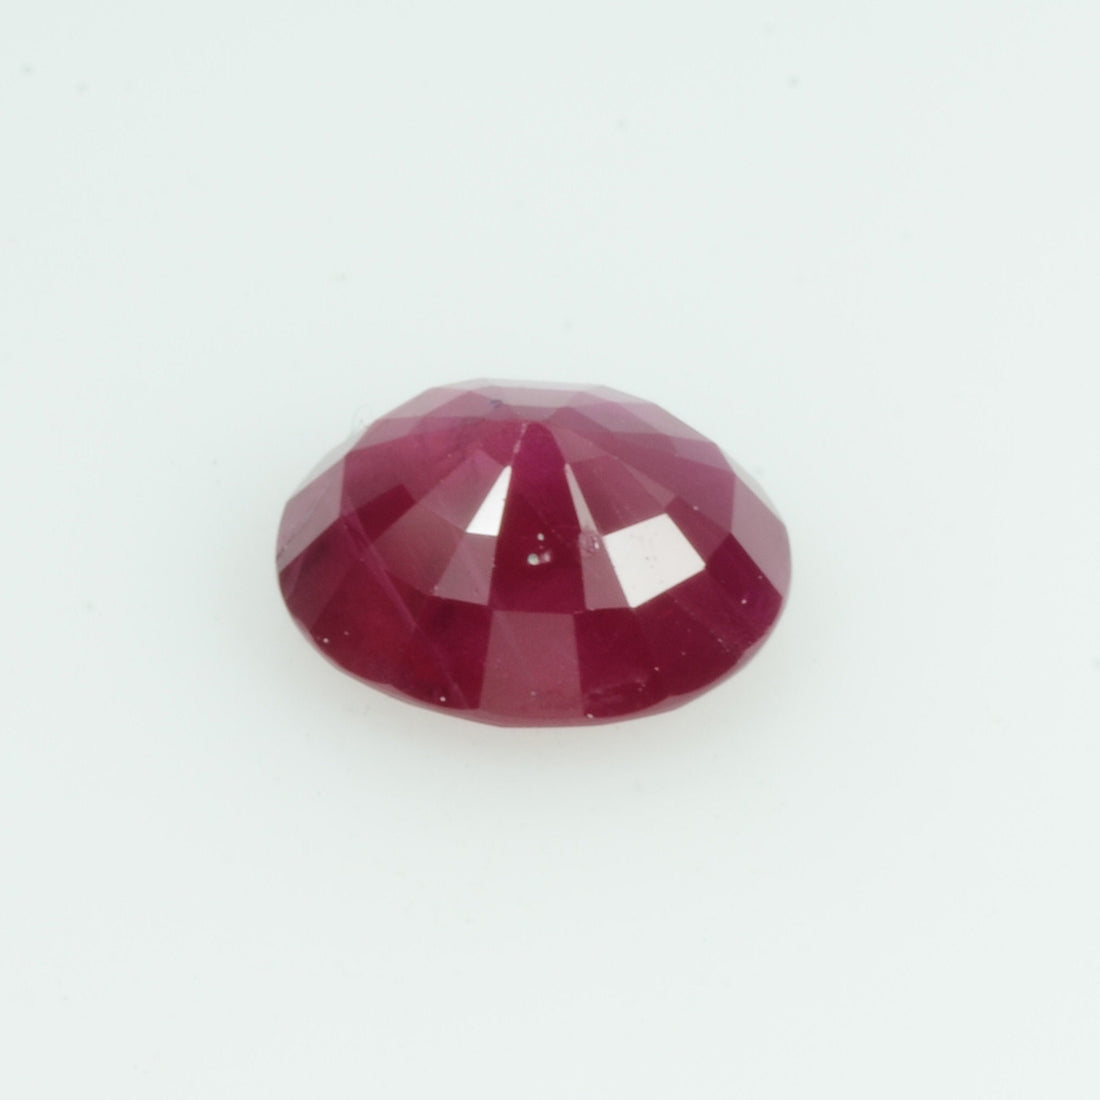 0.81 Cts Natural Burma Ruby Loose Gemstone Oval Cut